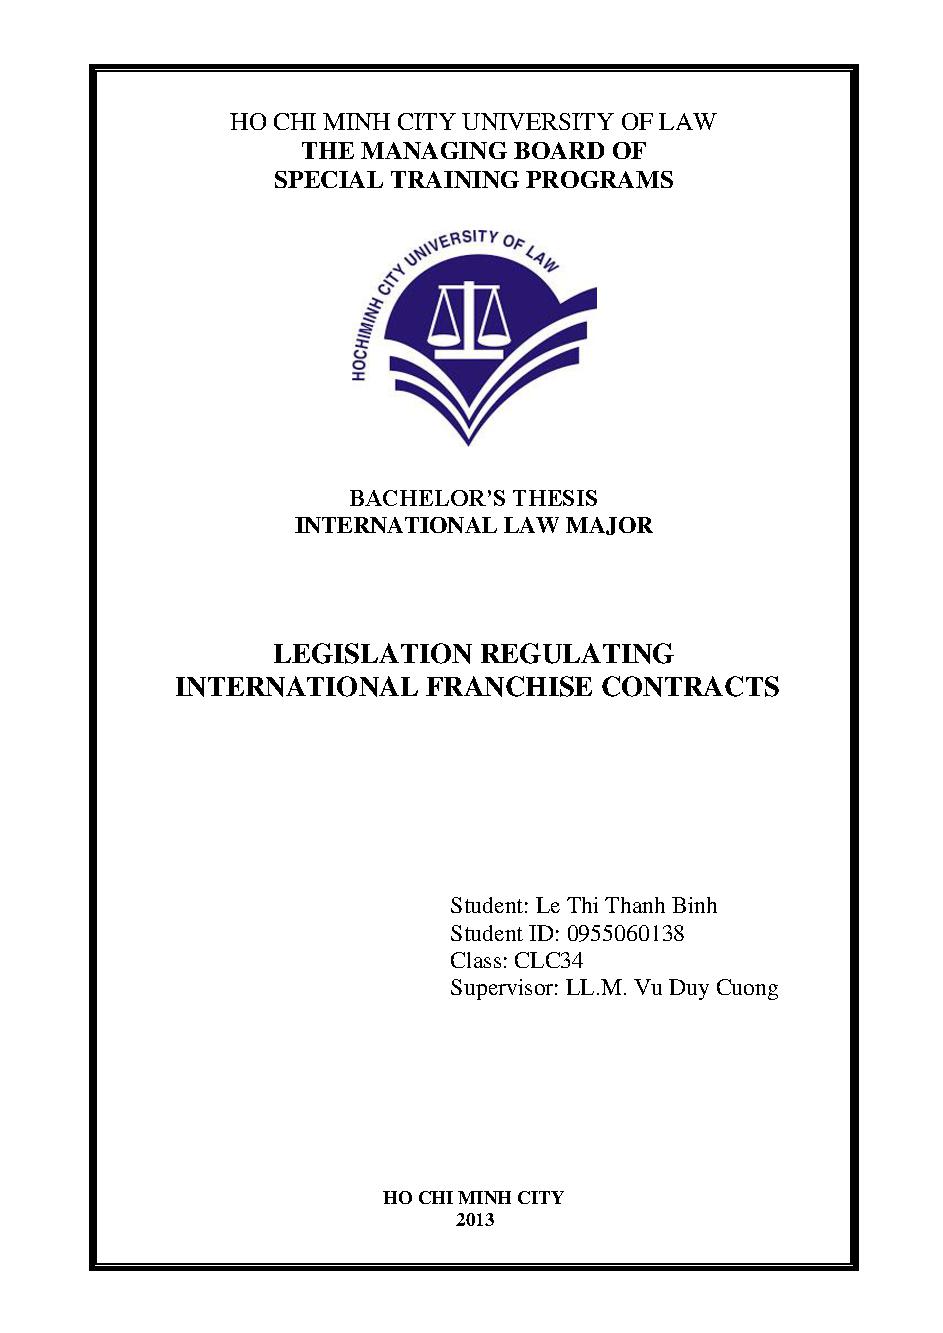 Legislation regulating international franchise contracts